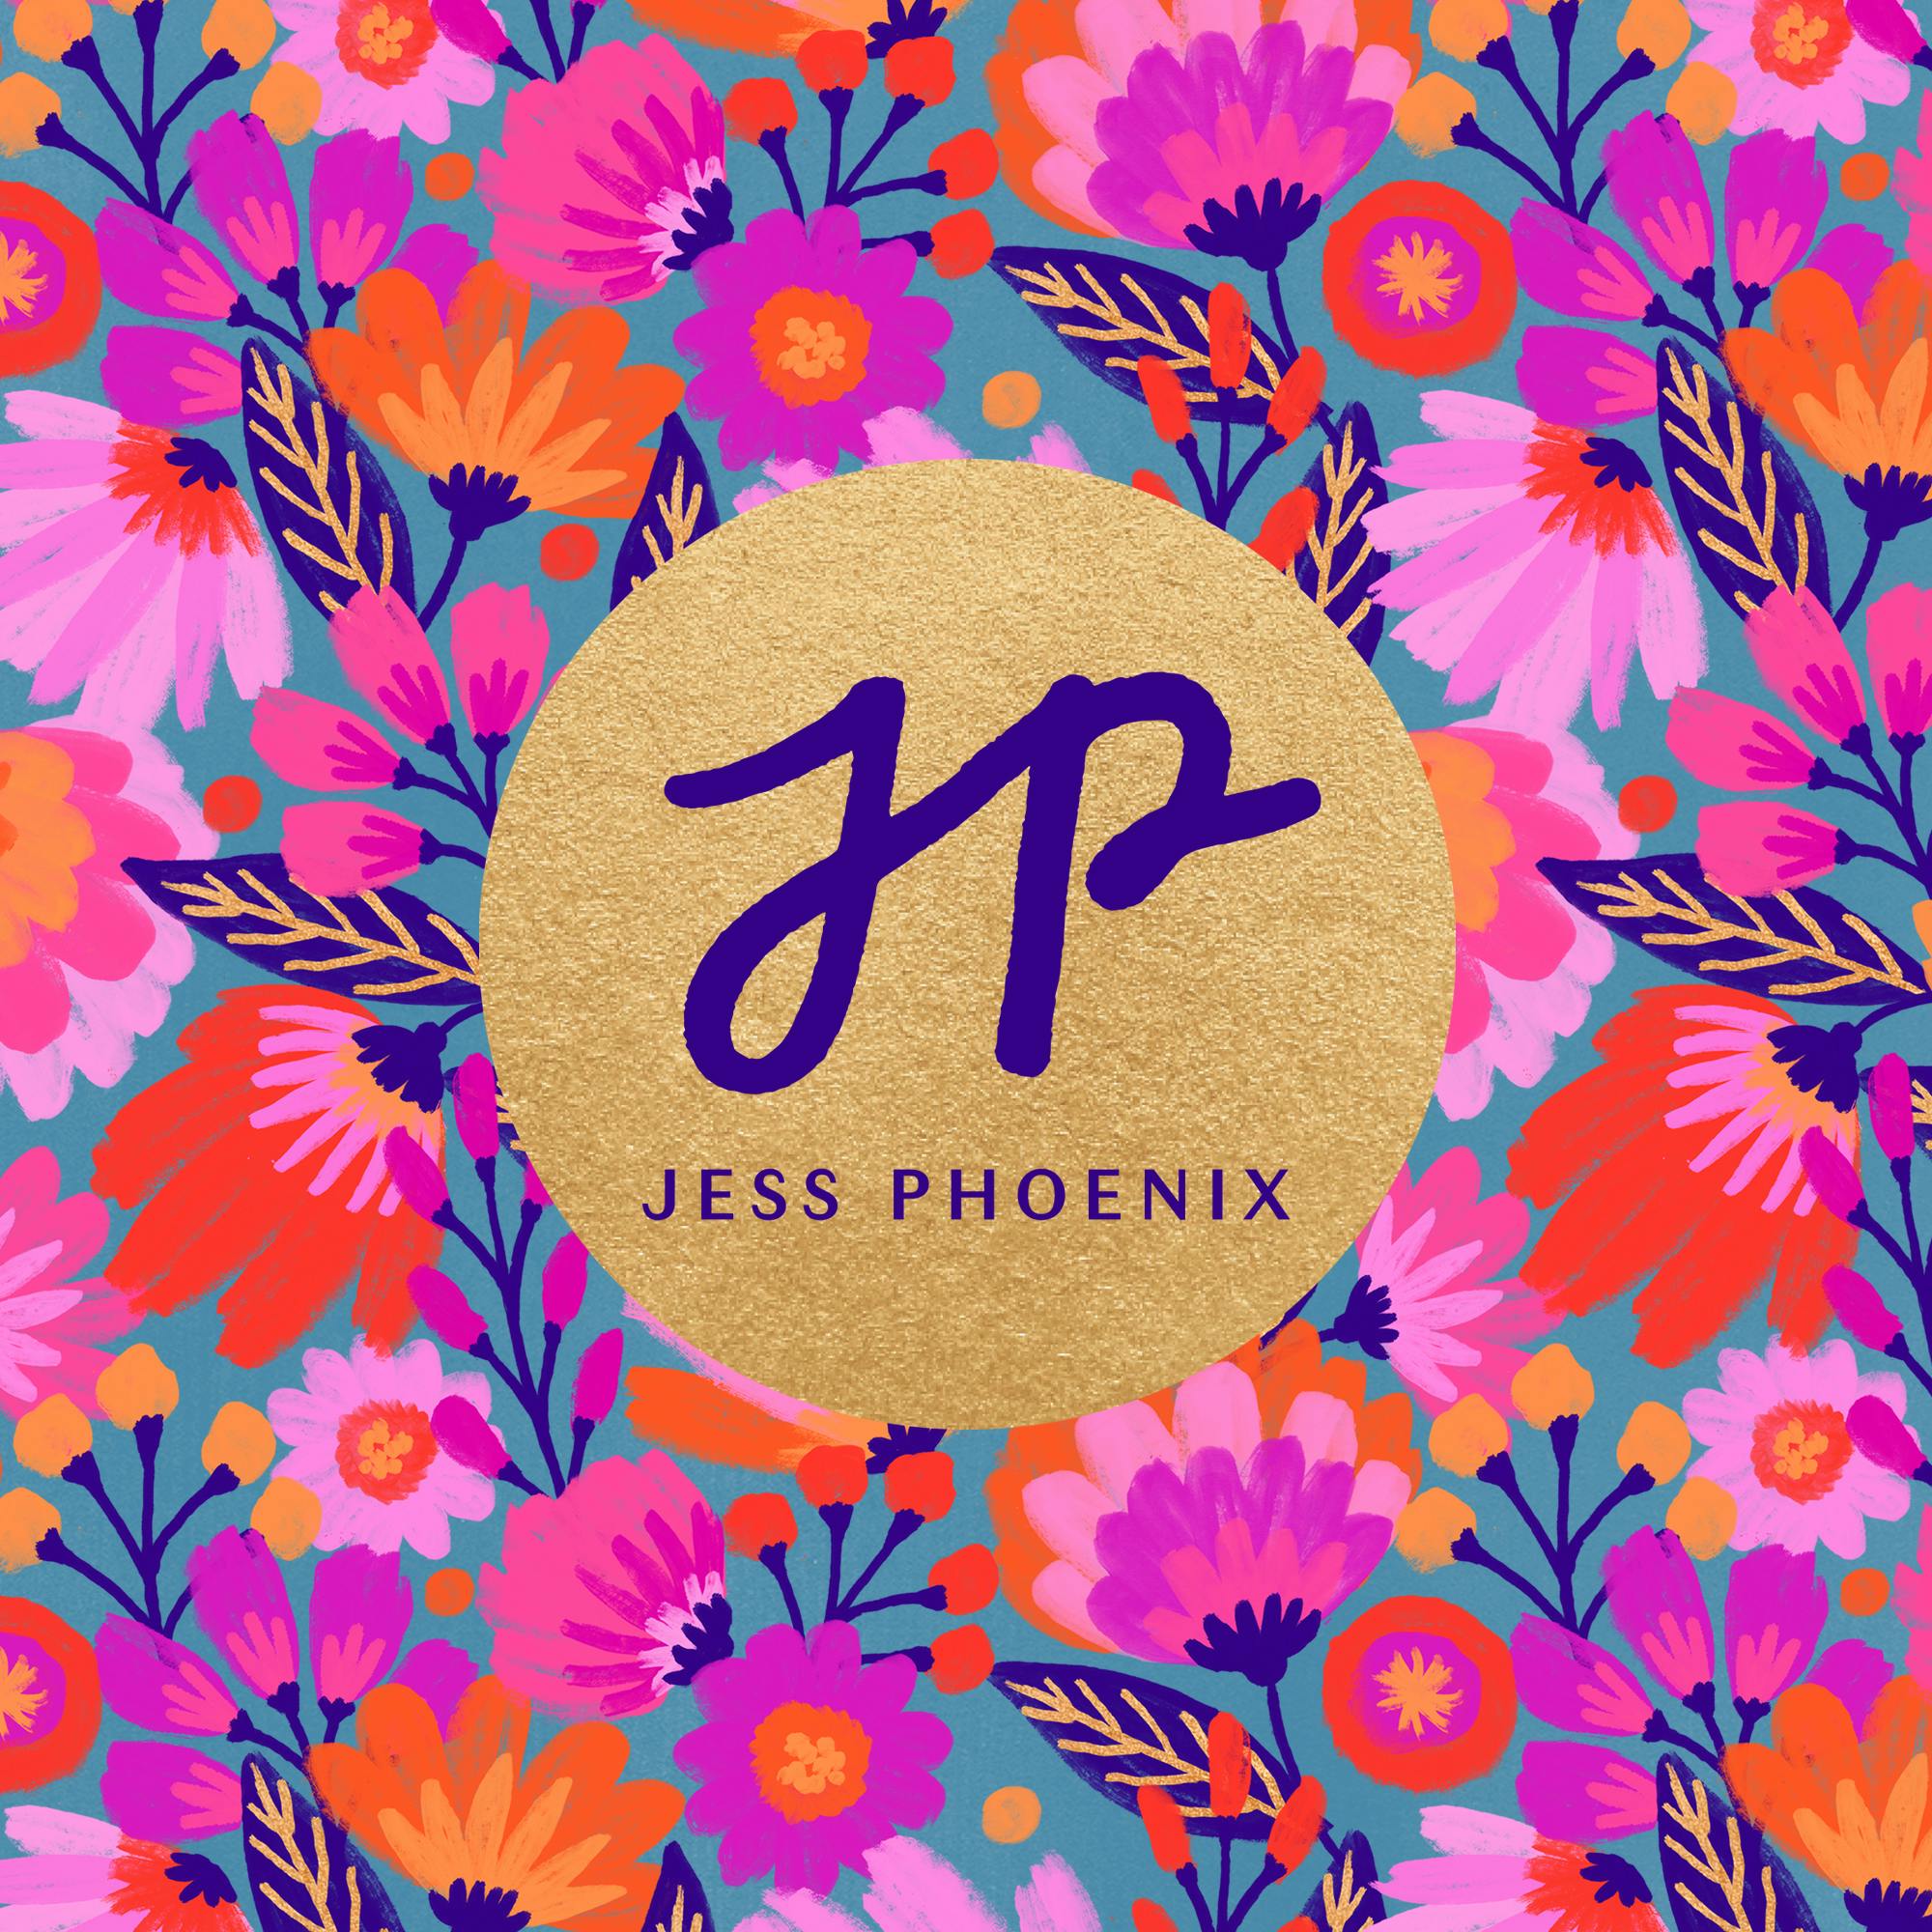 Artist Interview | Jess Phoenix